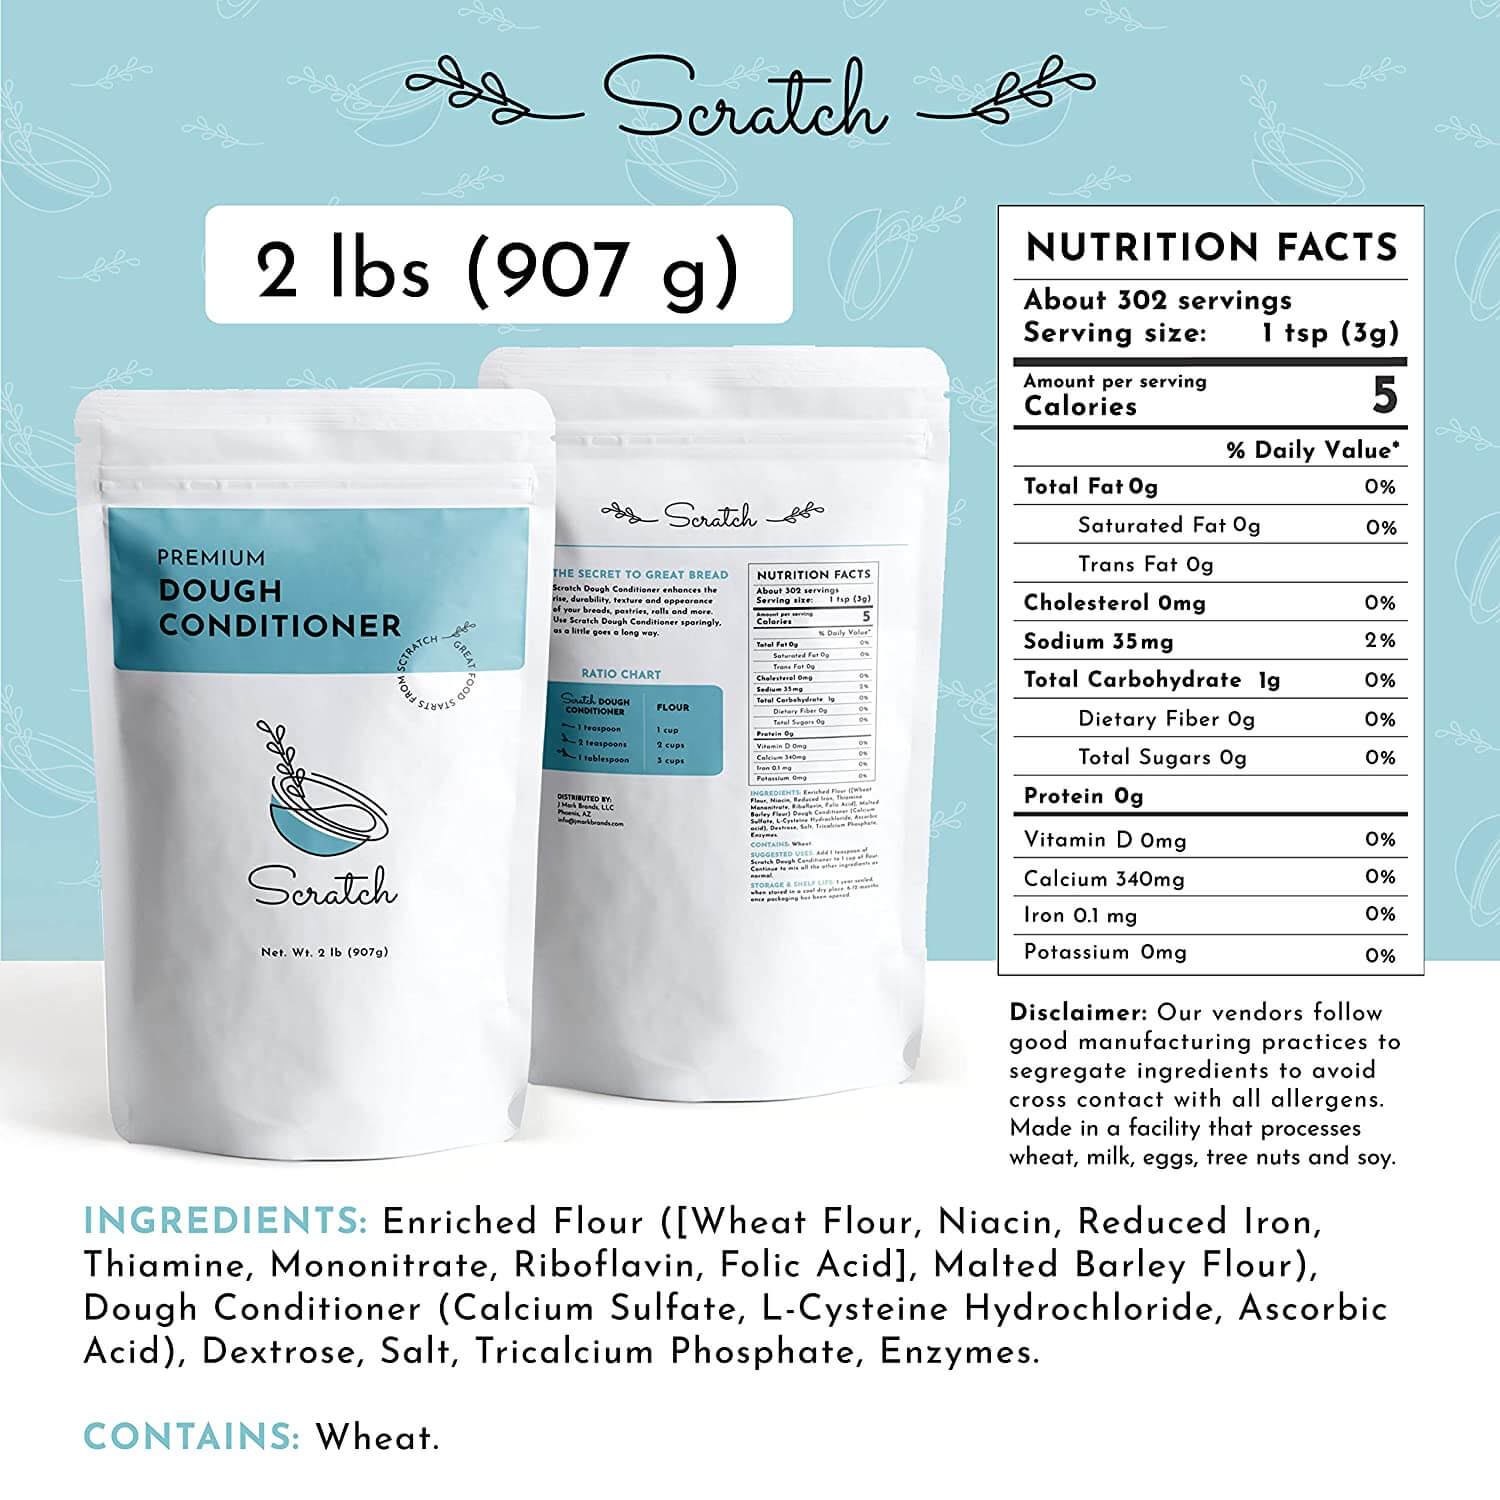 Scratch Premium Dough Conditioner - 2 lbs - Nutritional Facts